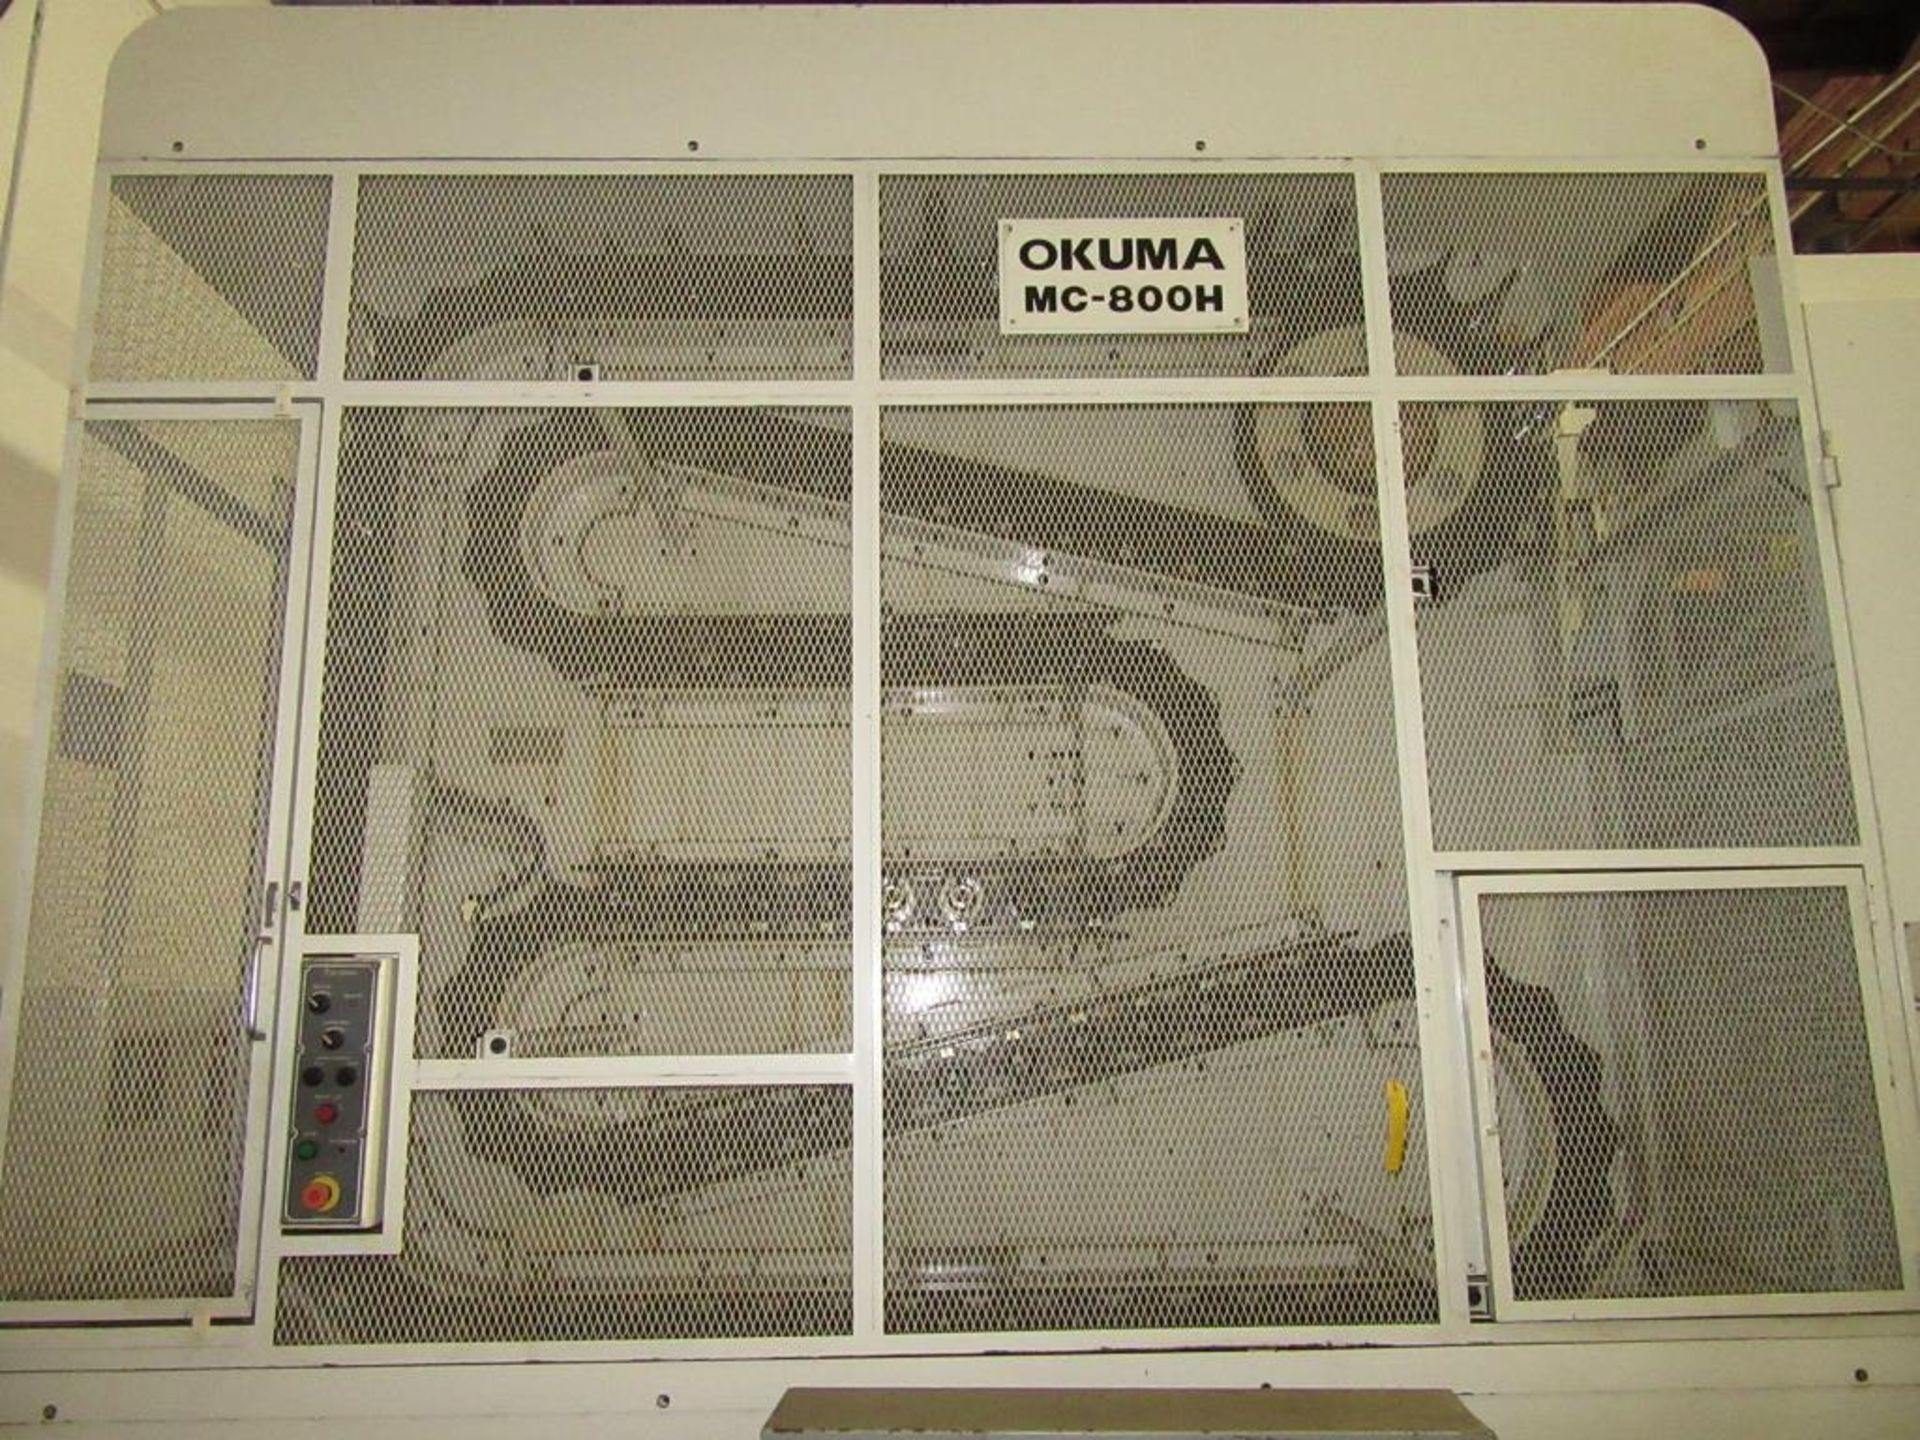 Okuma MC-800H. 1999 - CNC Horizontal Machining Center with OSP 7000M 3-Axis Control Panel, 32" - Image 6 of 24